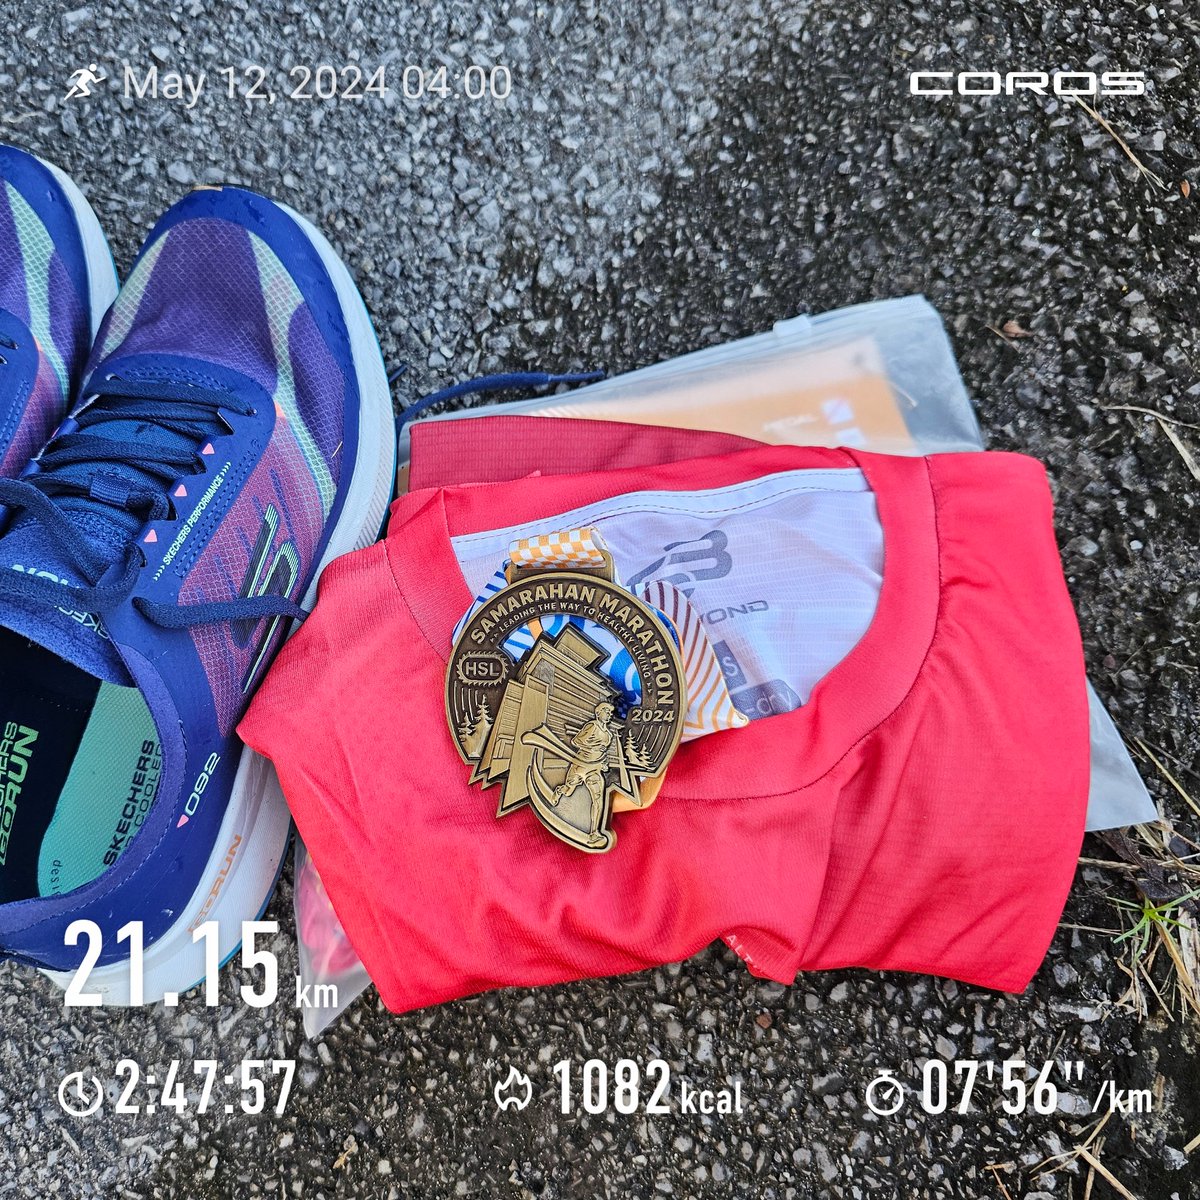 No training + muscle memories + determination = Finish strong. <3hrs. 😅 
#samarahanmarathon2024 #halfmarathon #runhappy #enjoytheview